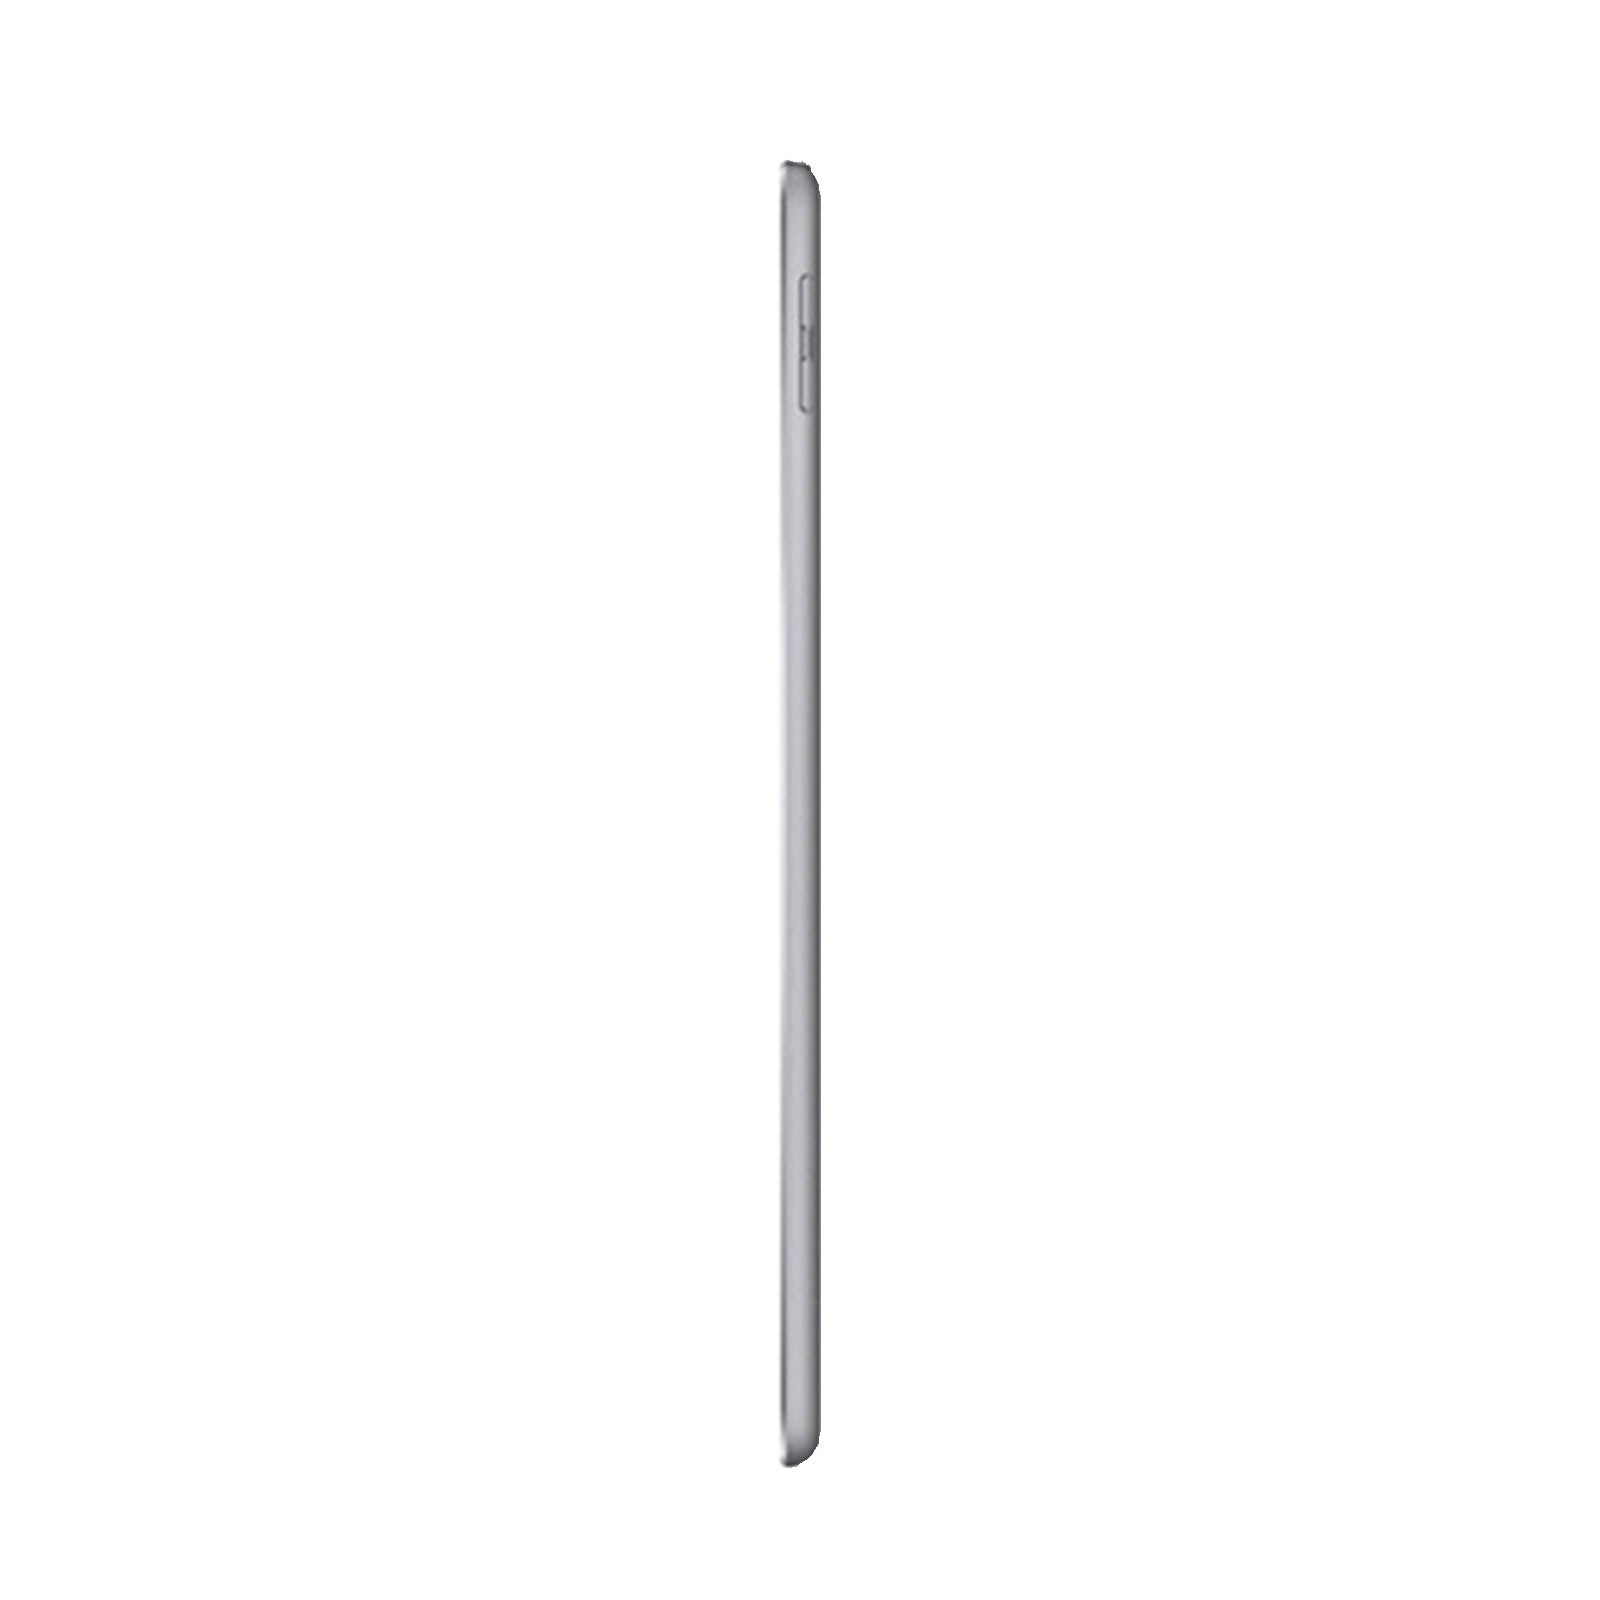 Apple iPad 5 128GB WiFi Space Grey - Very Good